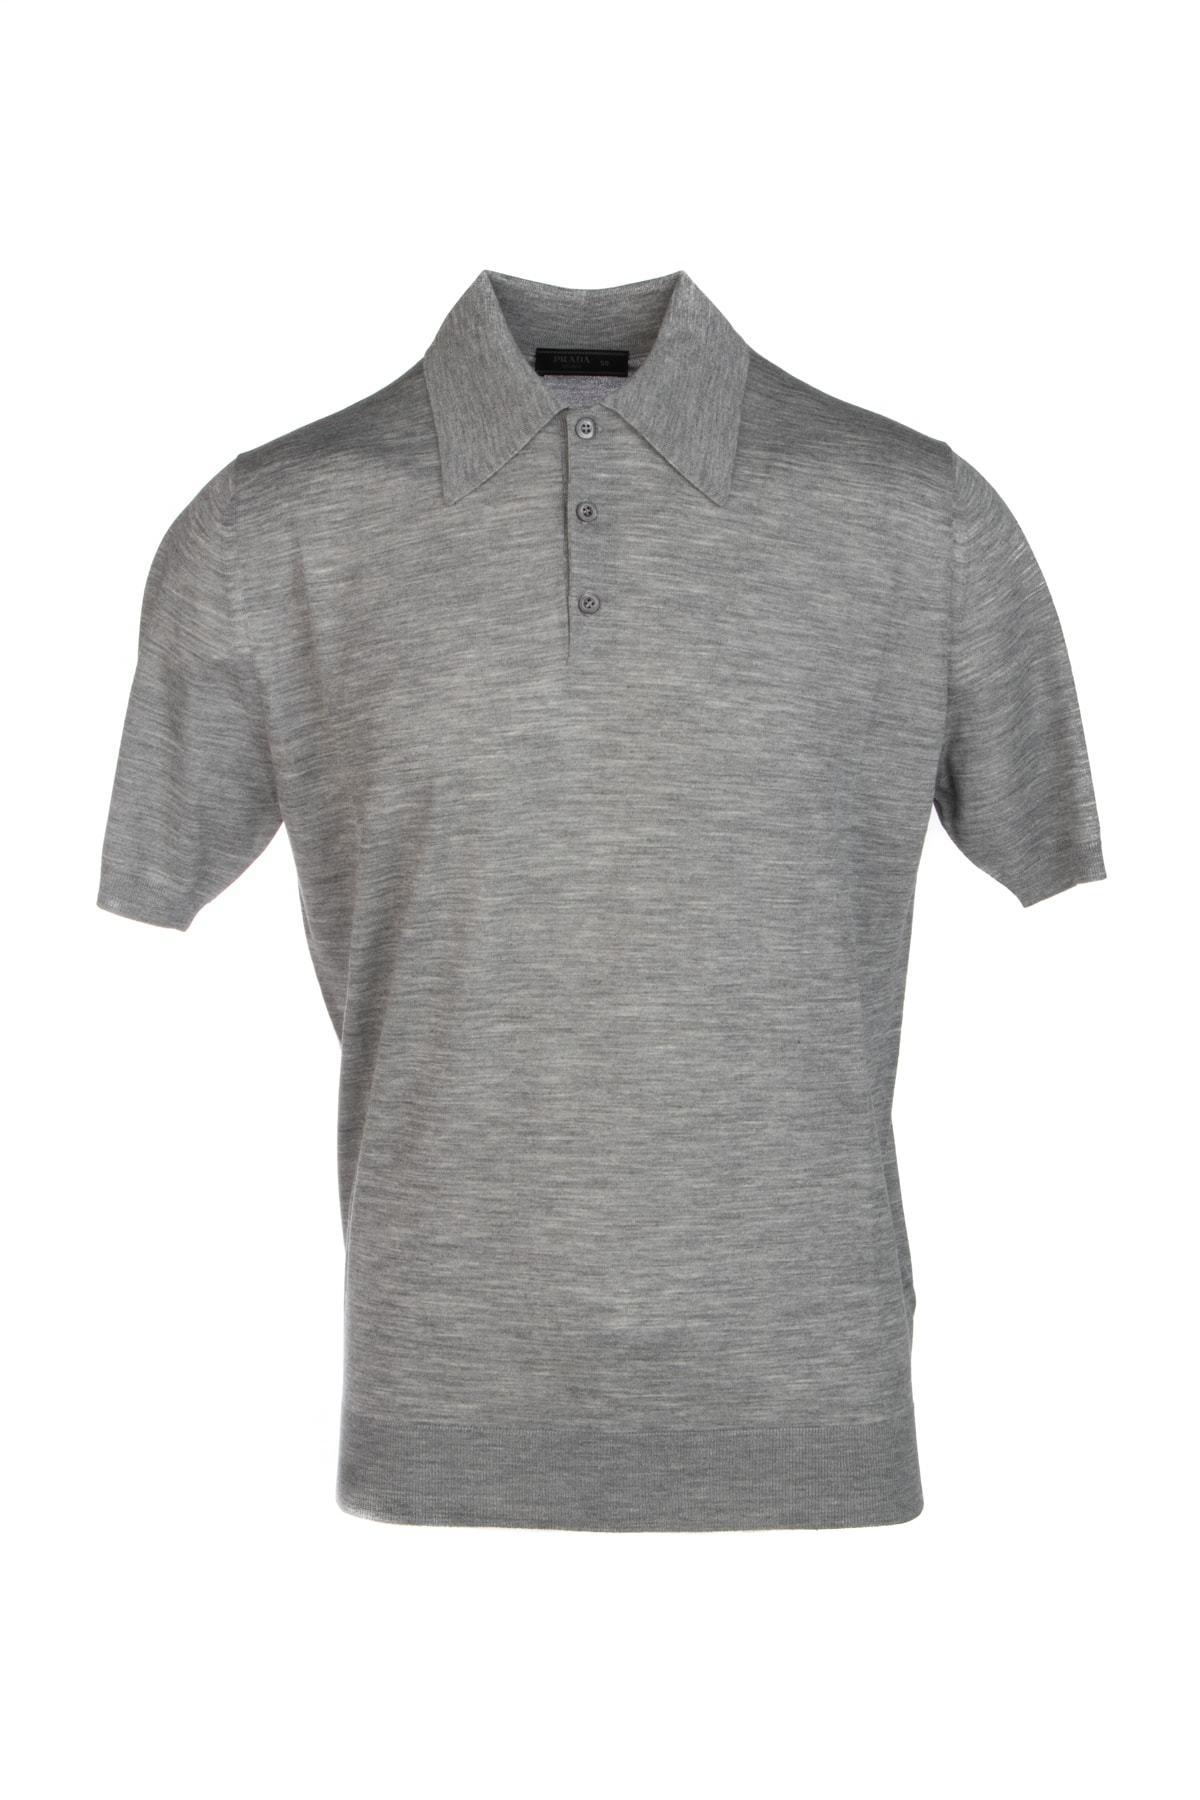 Prada Cotton Button-up Polo Shirt in Grey (Gray) for Men - Lyst